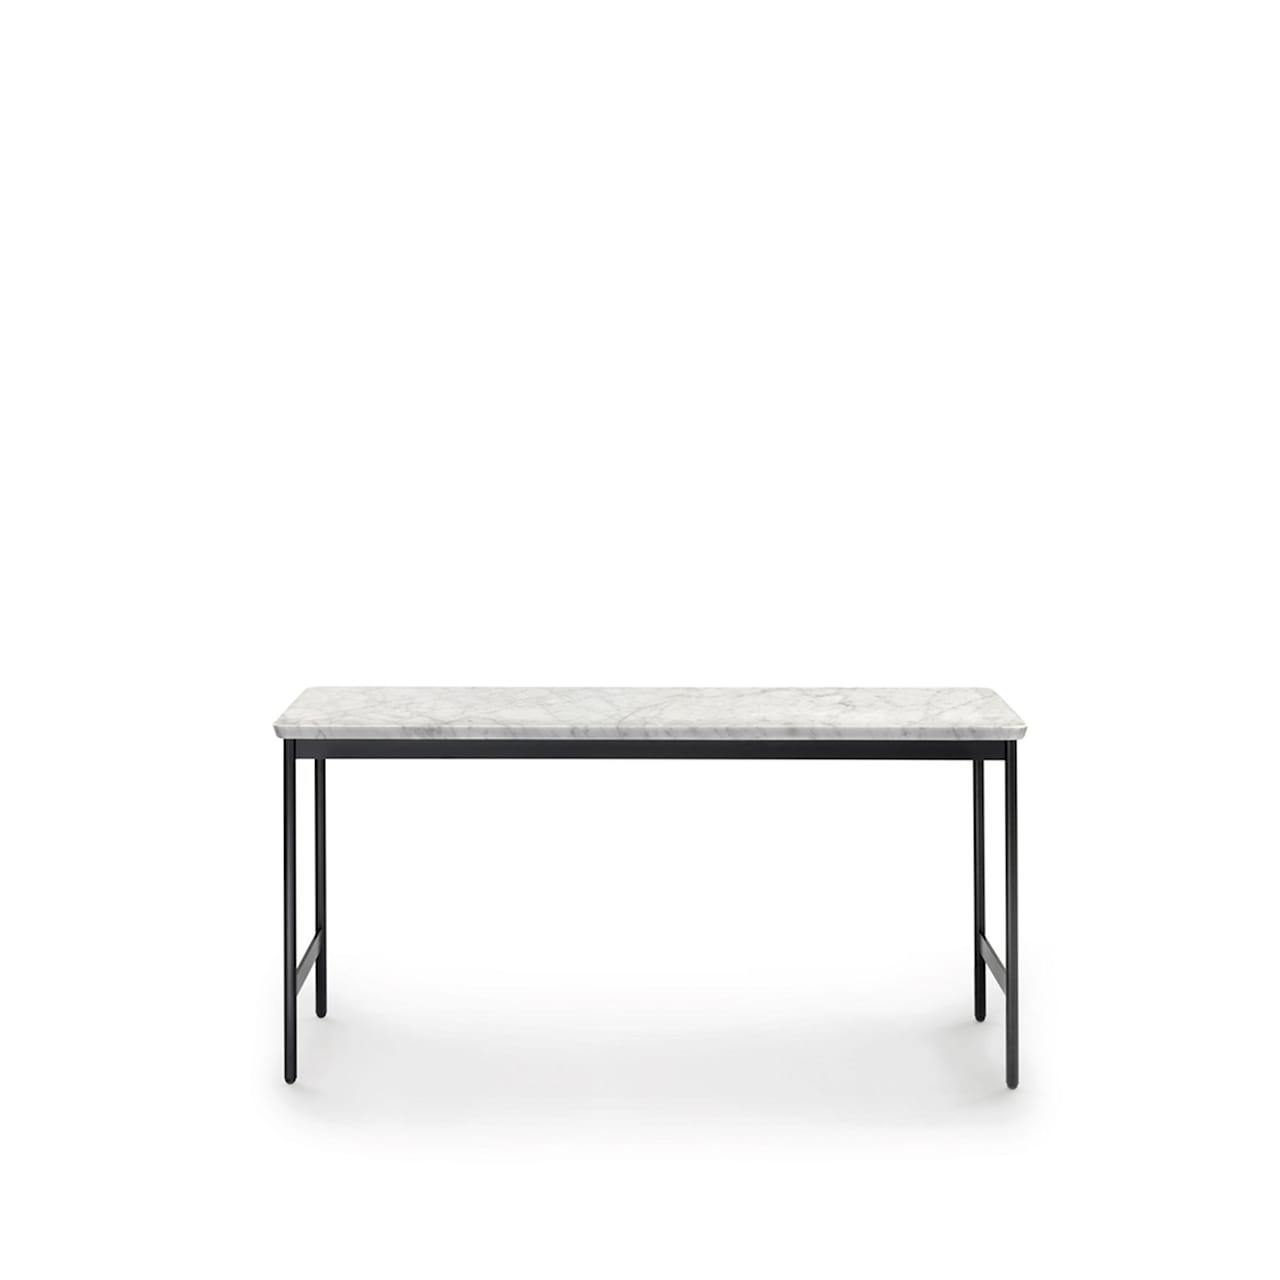 Capilano Small Table 96 x 30 cm